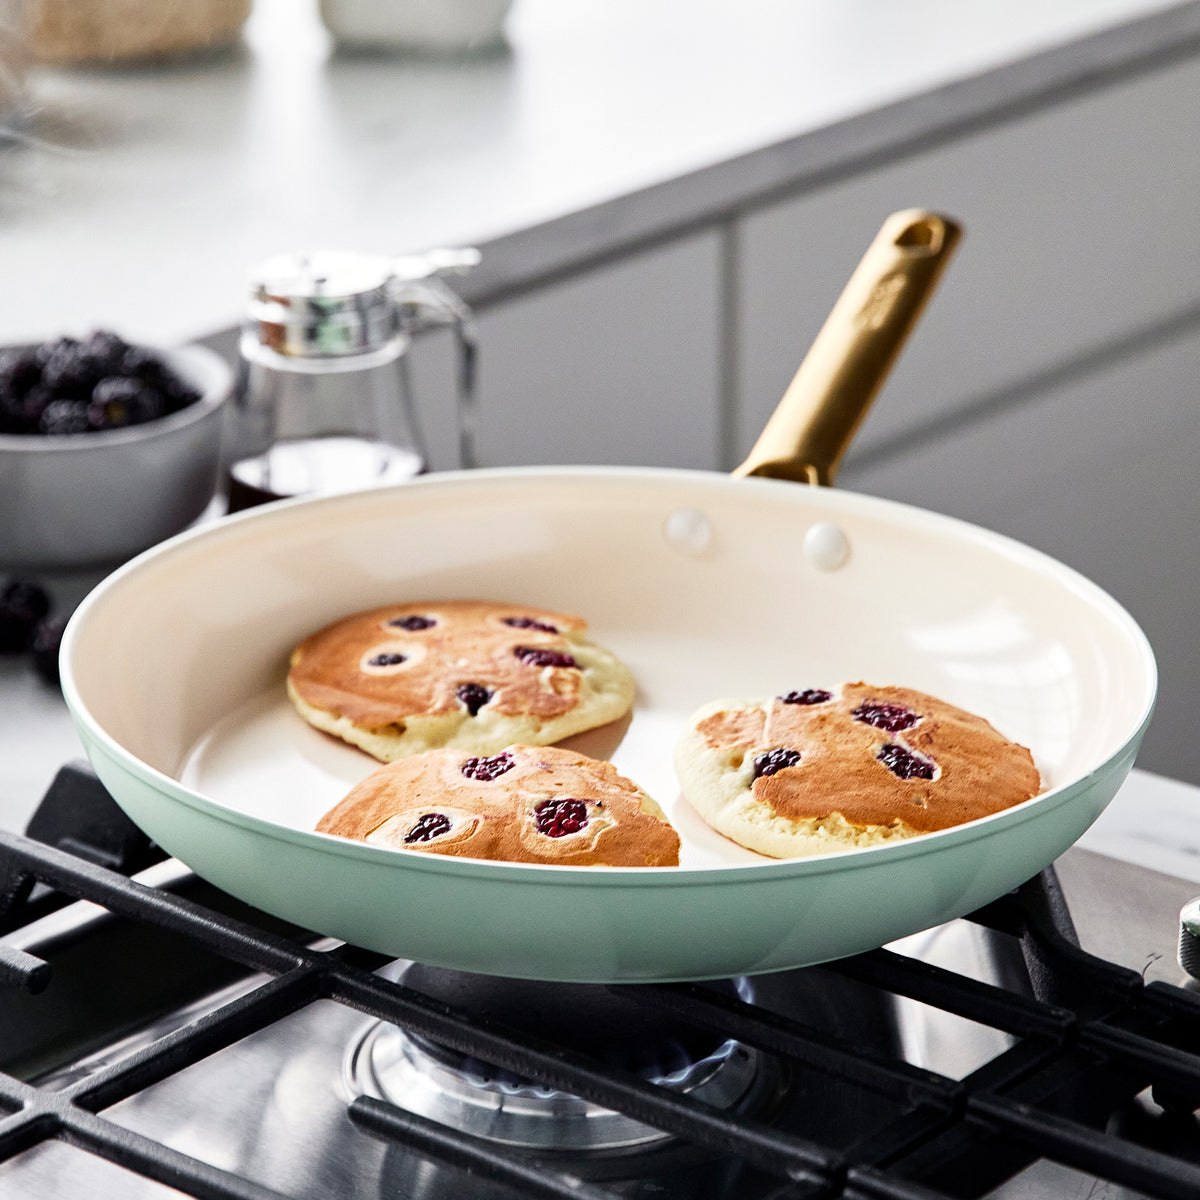 Kitchen Details Pro Series Deep Roasting Pan with Diamond Base - Gold-Tone